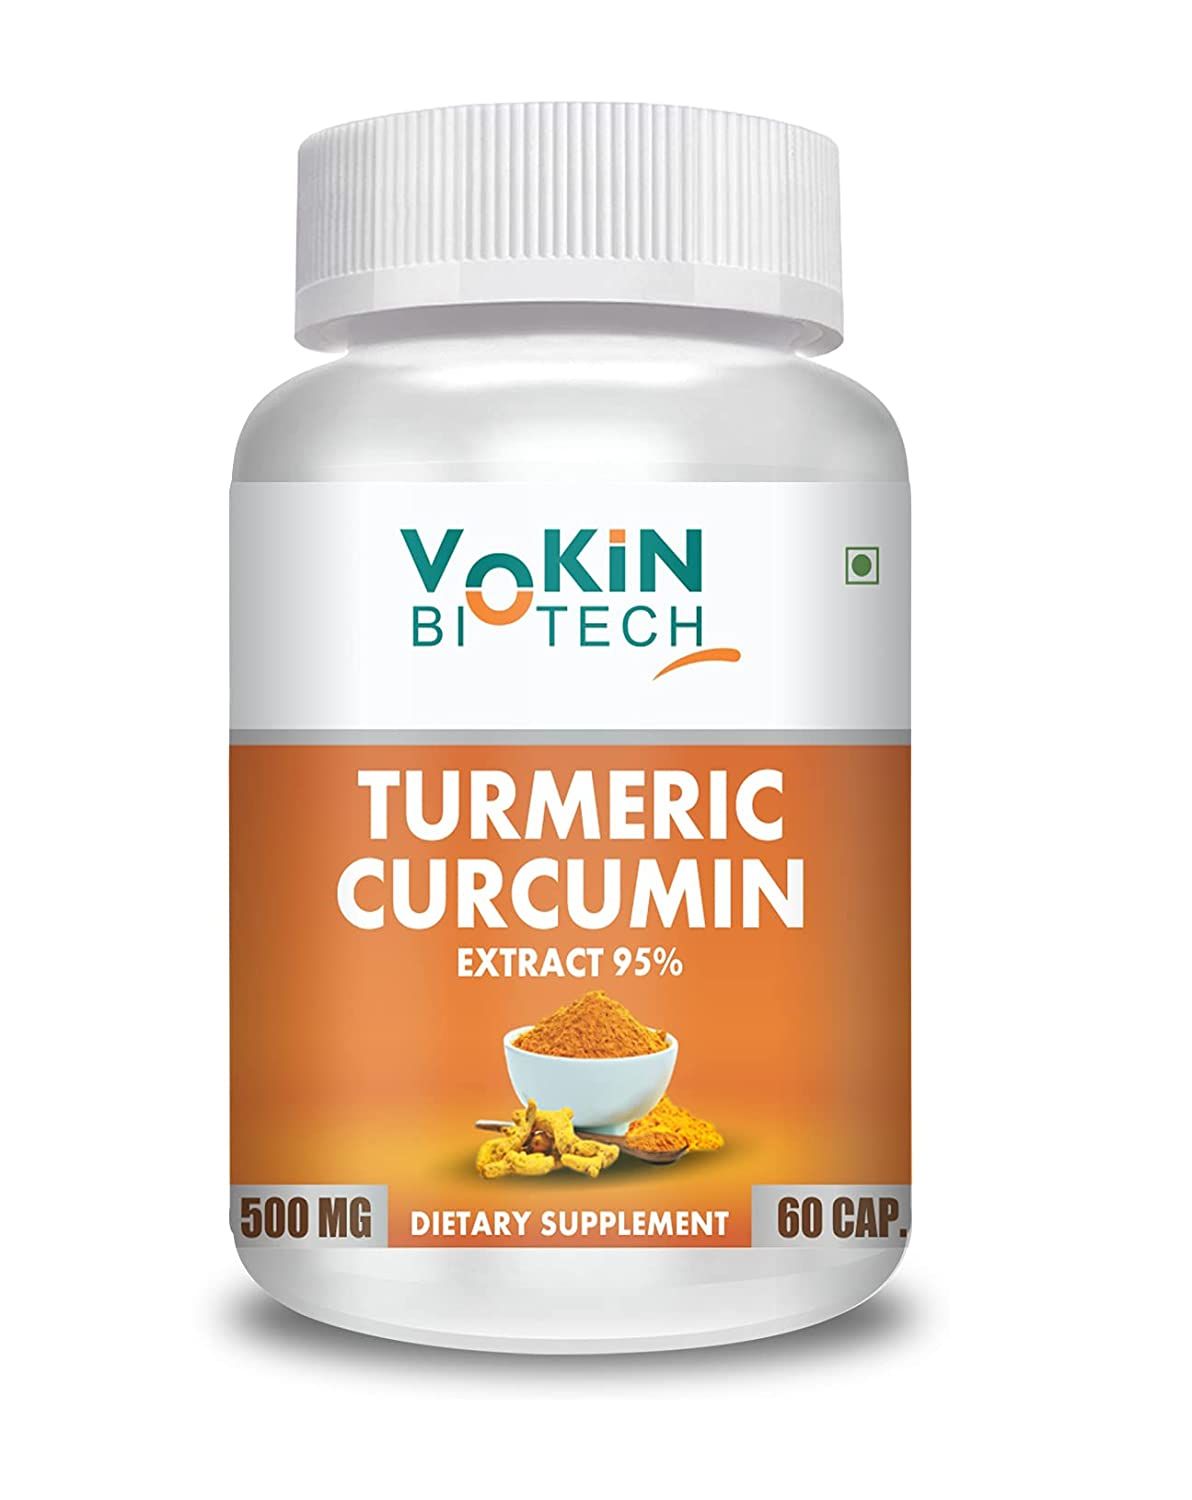 Vokin Biotech Turmeric Curcumin Extract Image